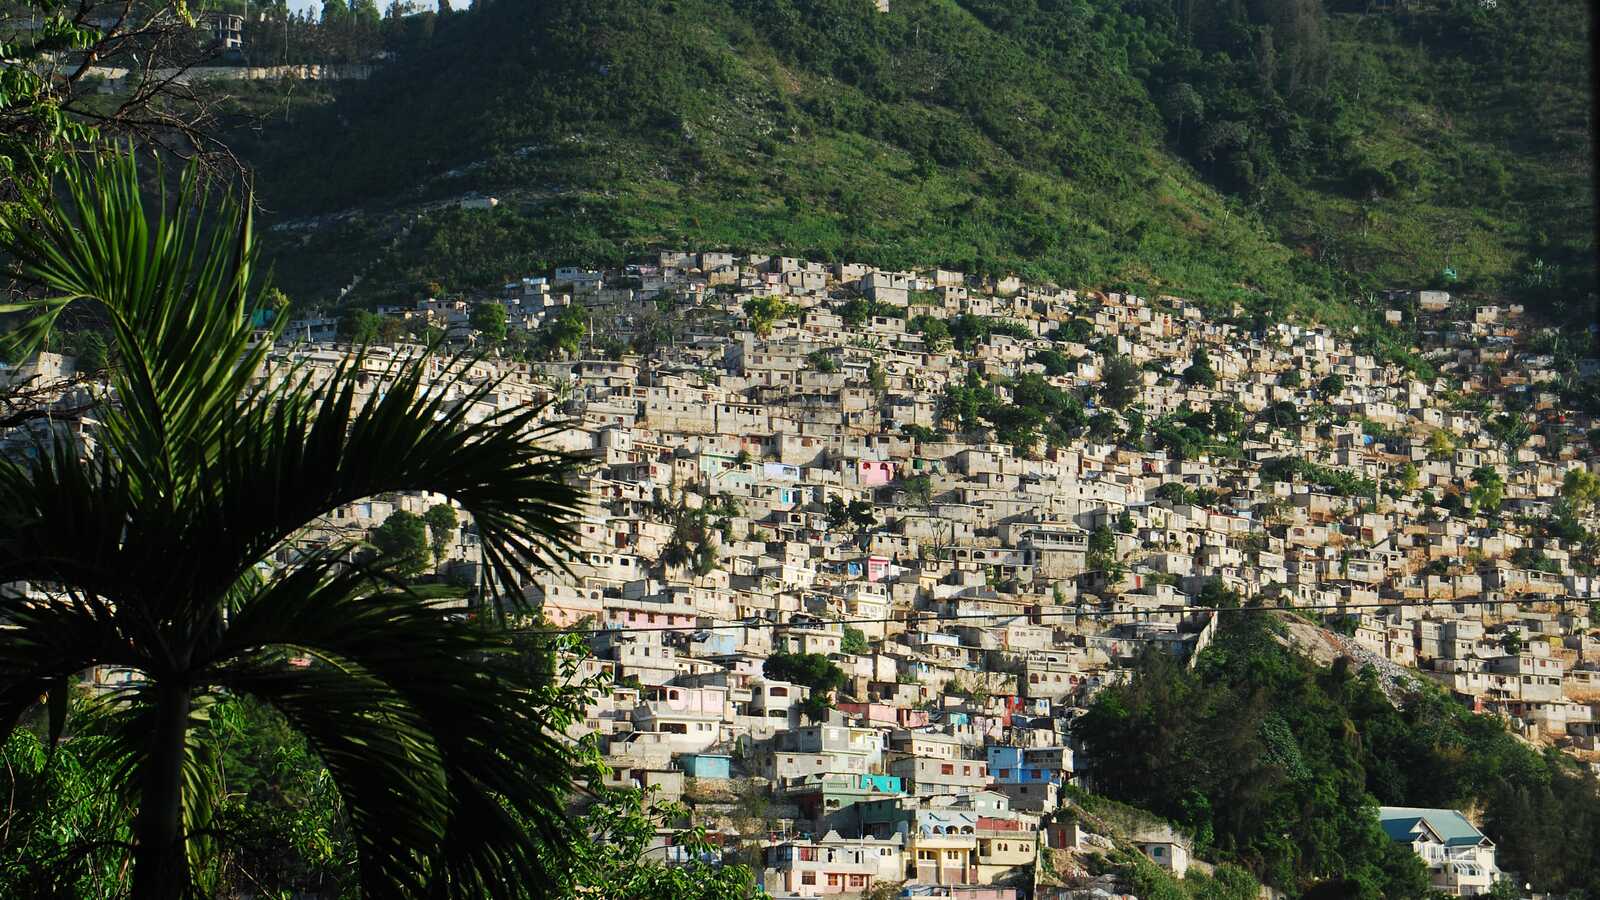 Aerial view of Haiti